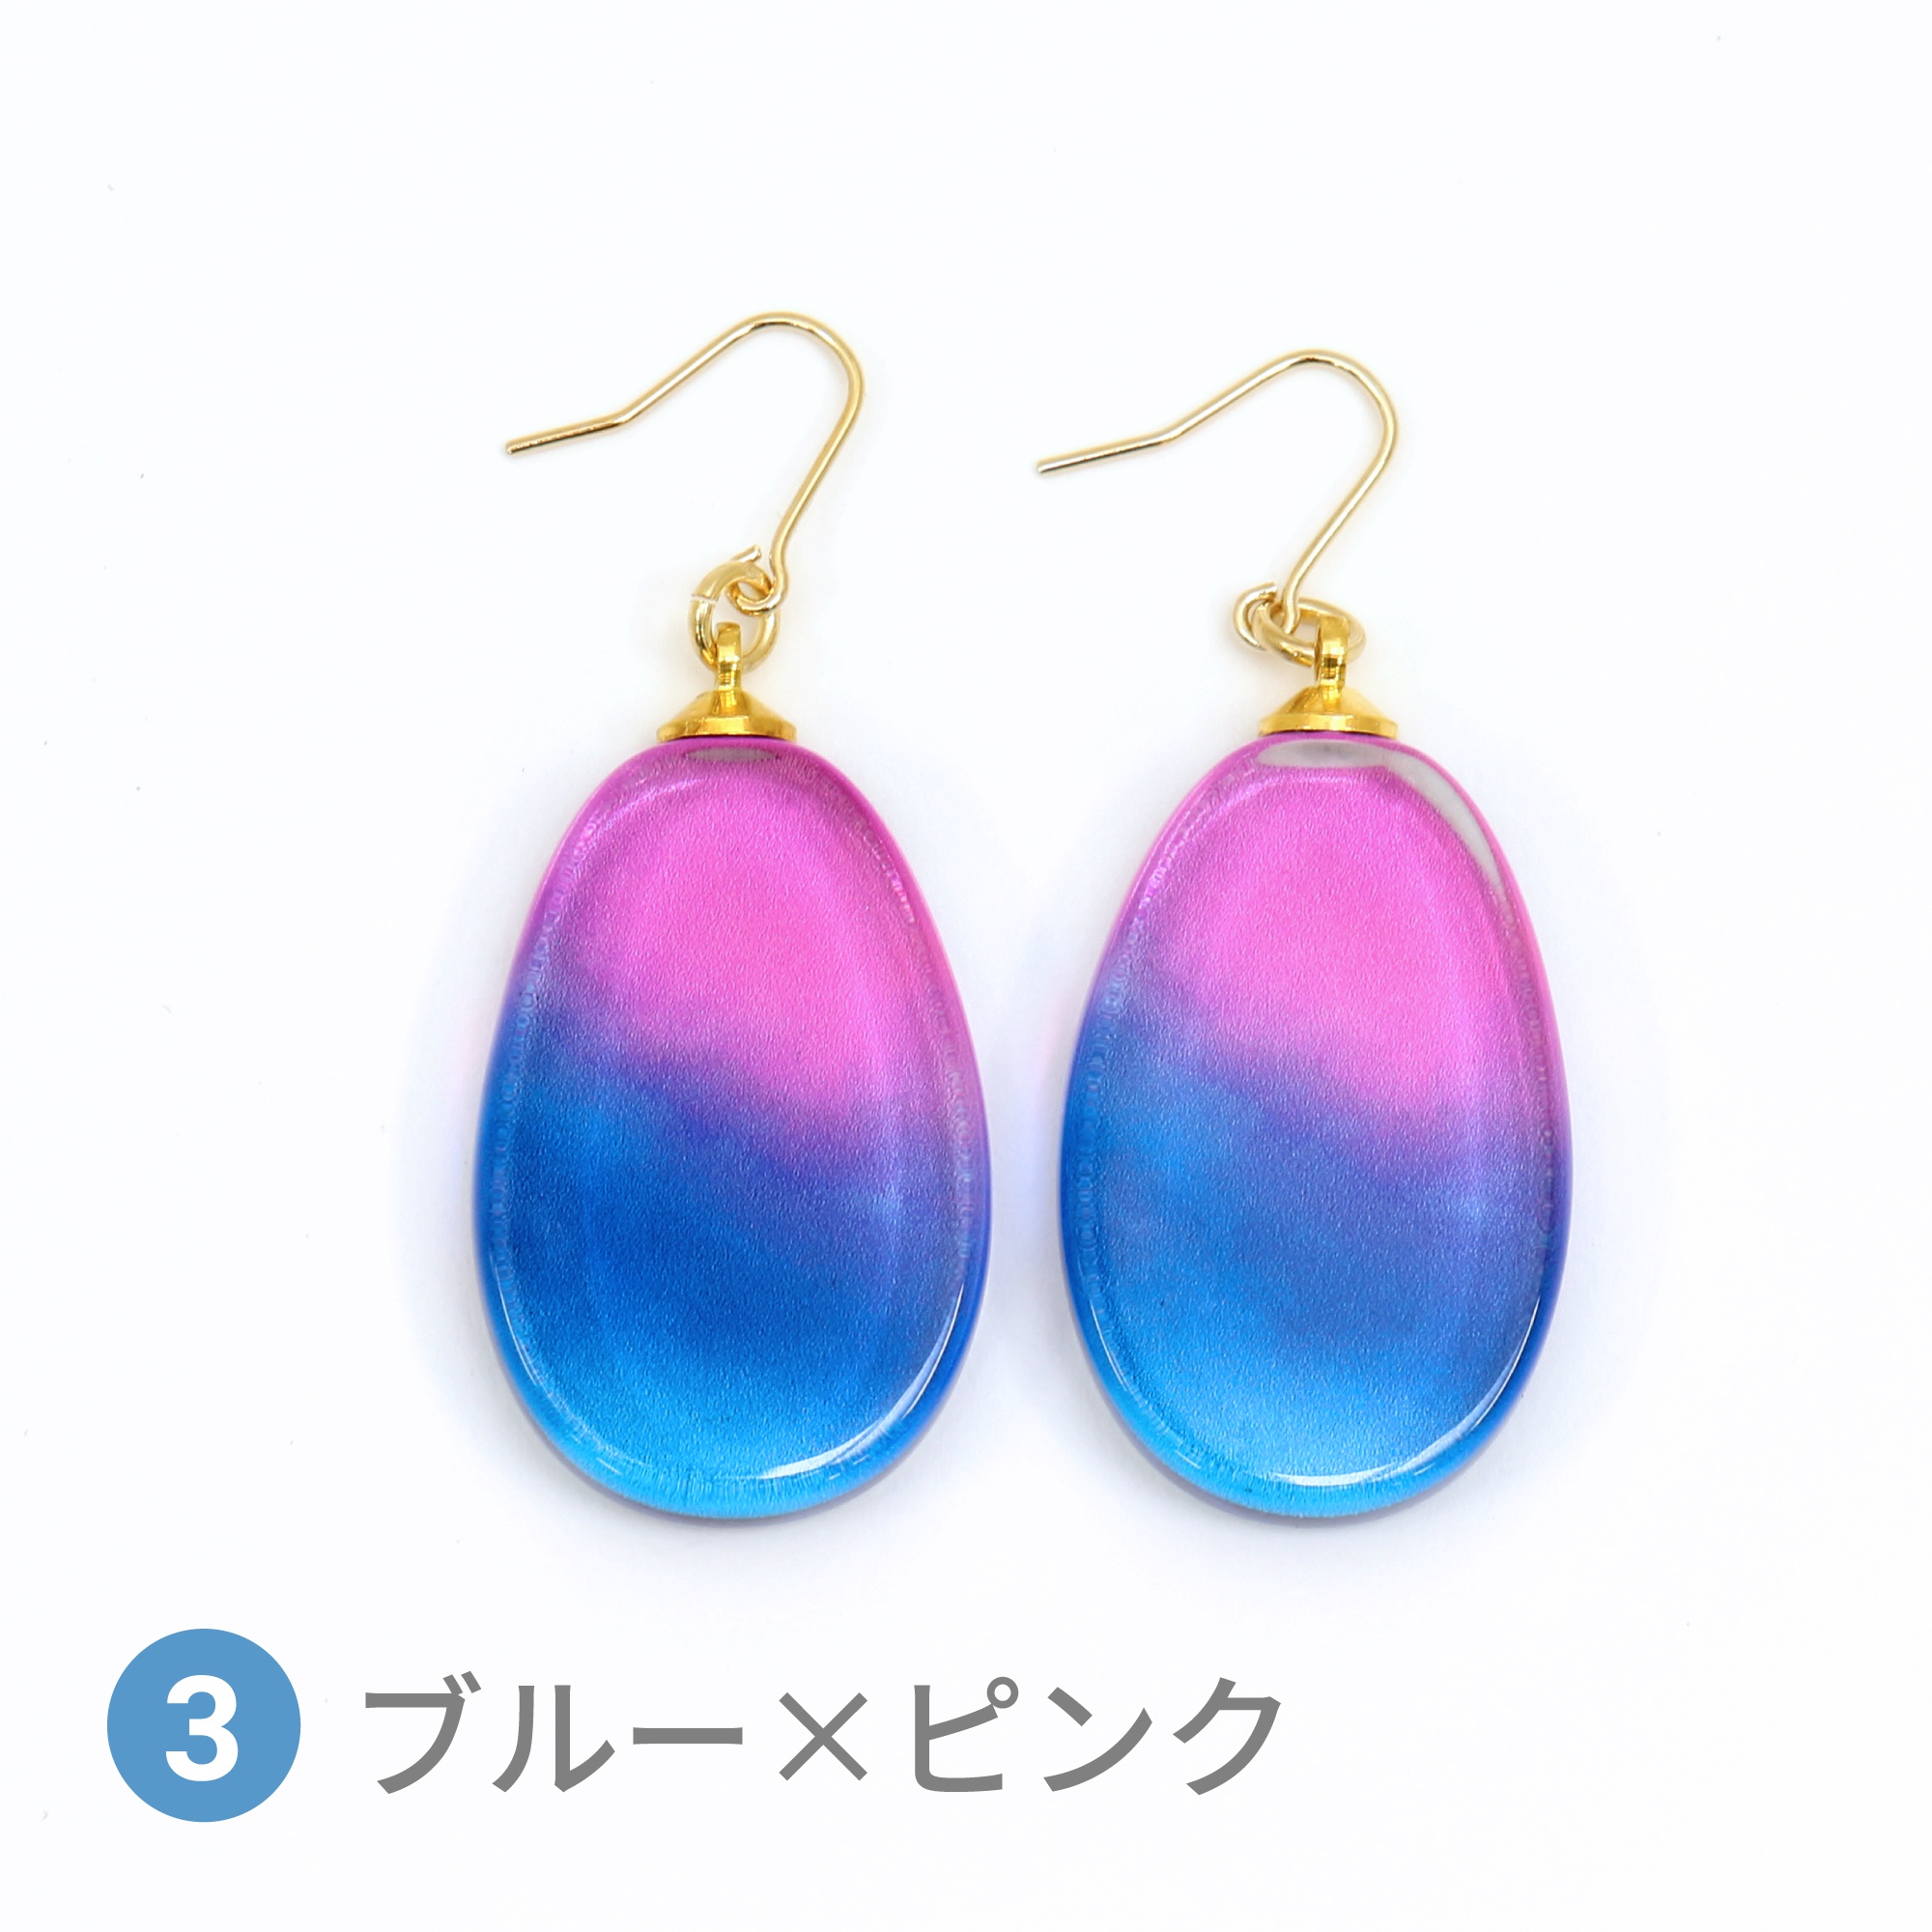 Glass accessories Pierced Earring AURORA blue & pink drop shape